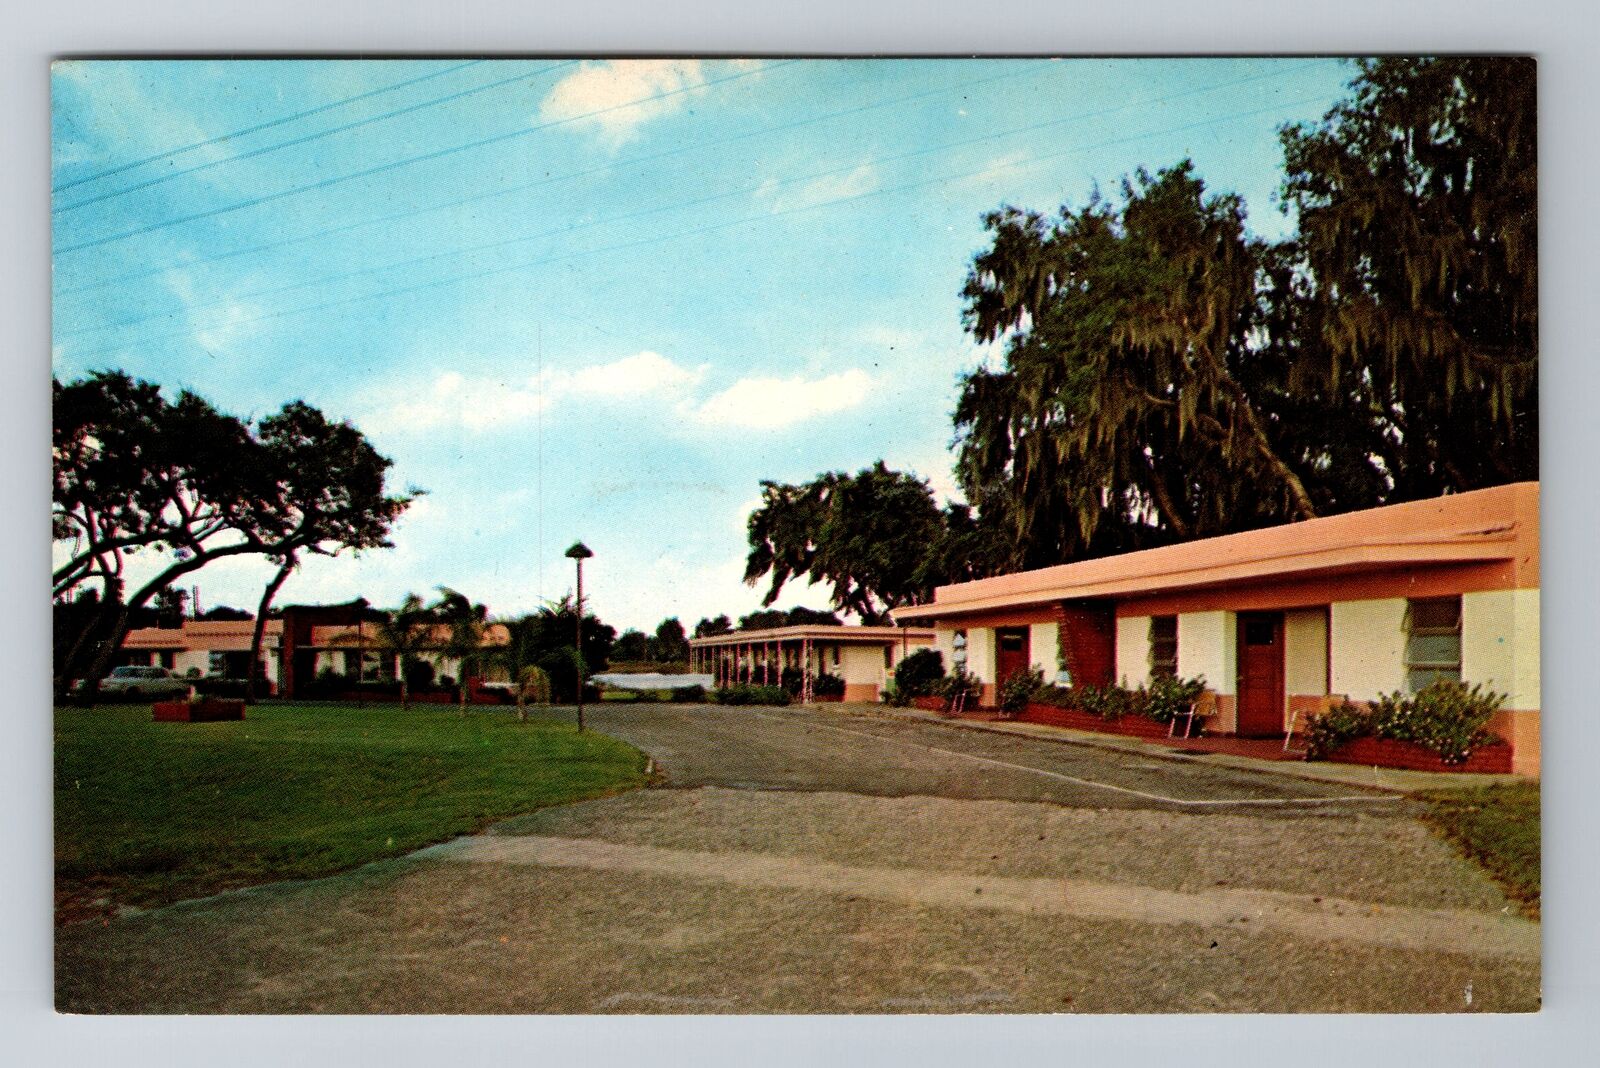 Apopka FL-Florida, Lake Page Motel, Advertising, Vintage Postcard